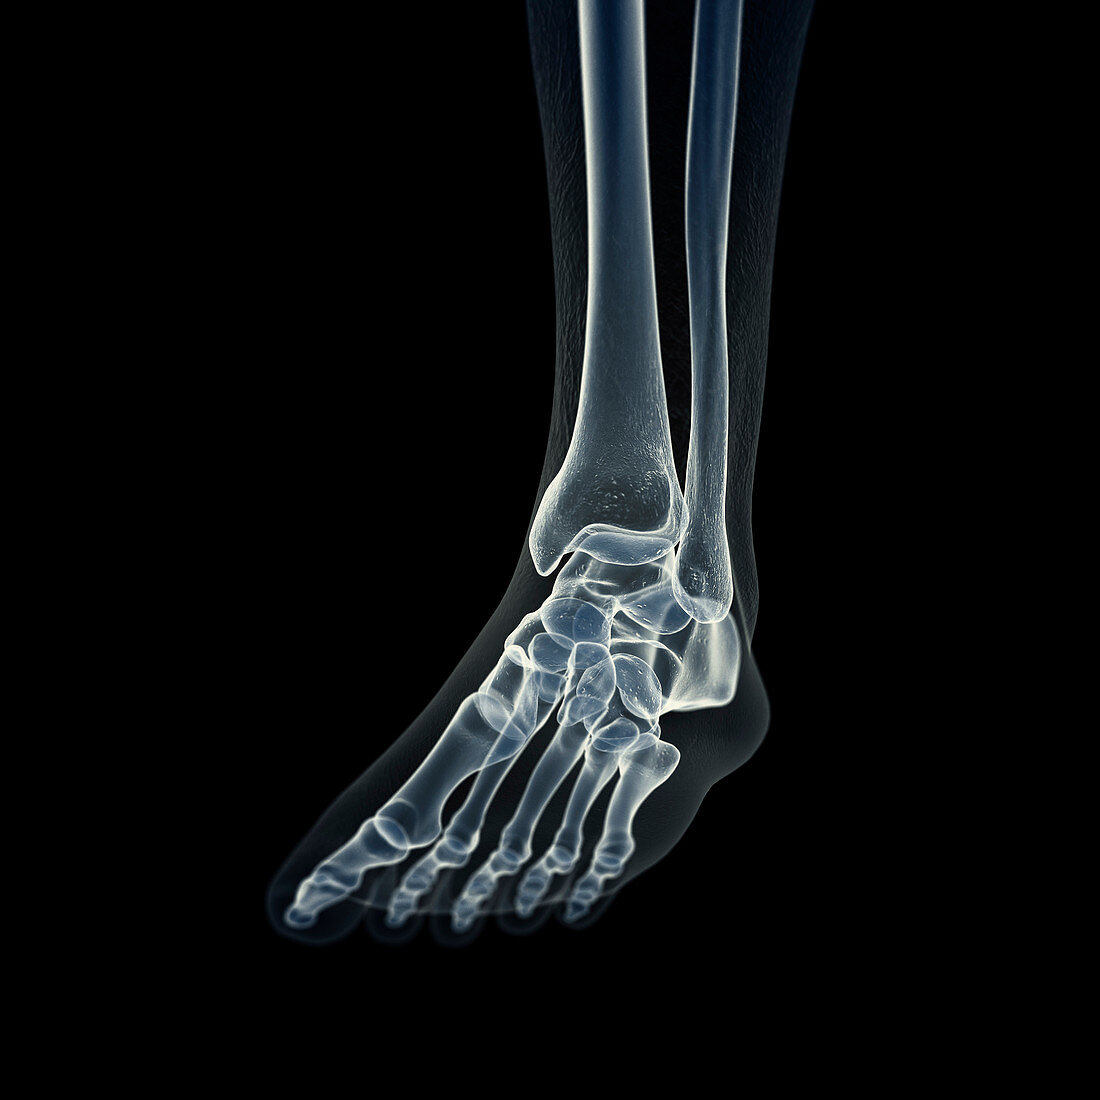 Illustration of the foot bones